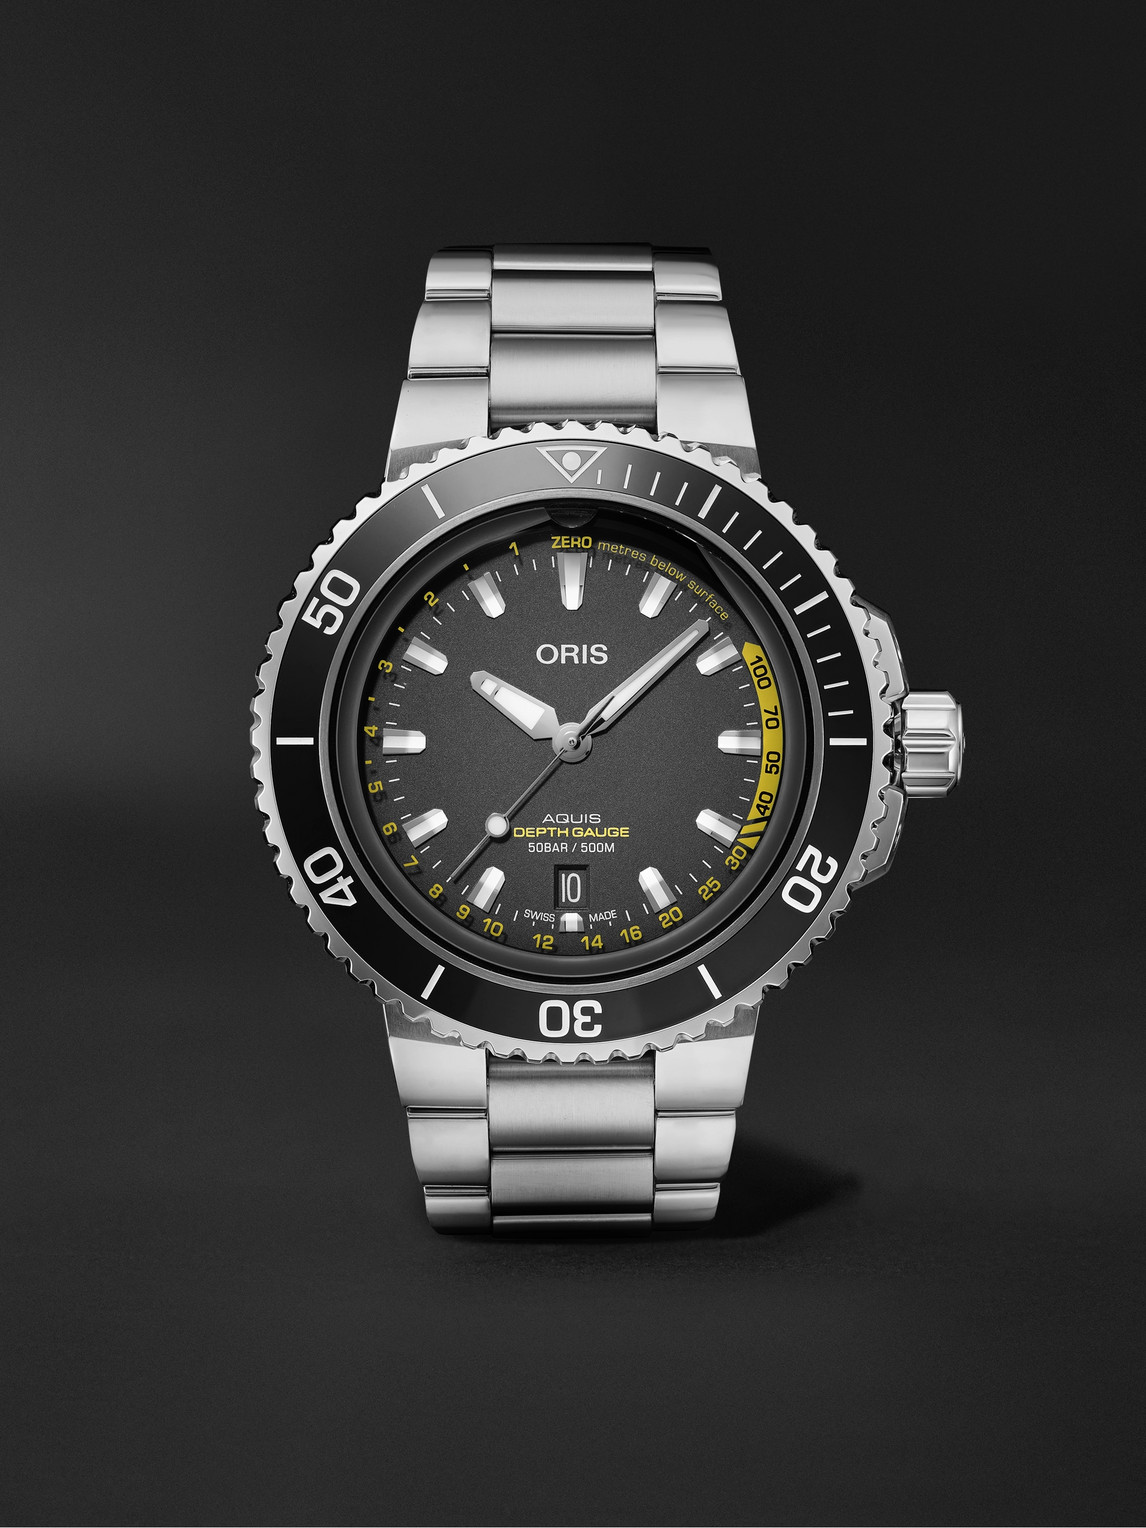 Oris Aquis Depth Gauge Automatic 45.8mm Stainless Steel Watch, Ref. No. 01 733 7755 4154-set Mb In Black